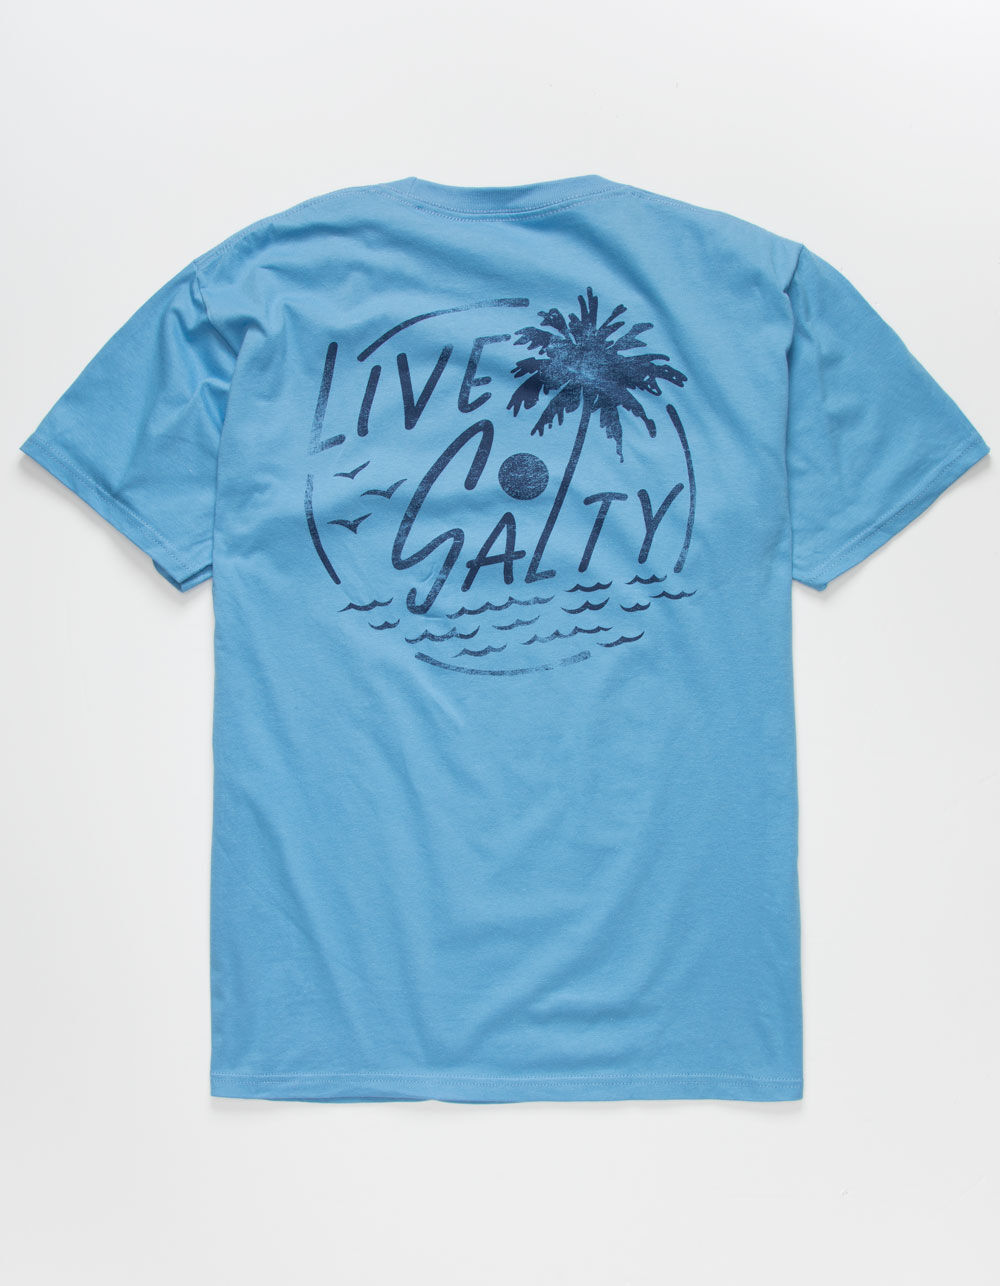 SALT LIFE Tidal Surge Mens T-Shirt - LIGHT BLUE | Tillys